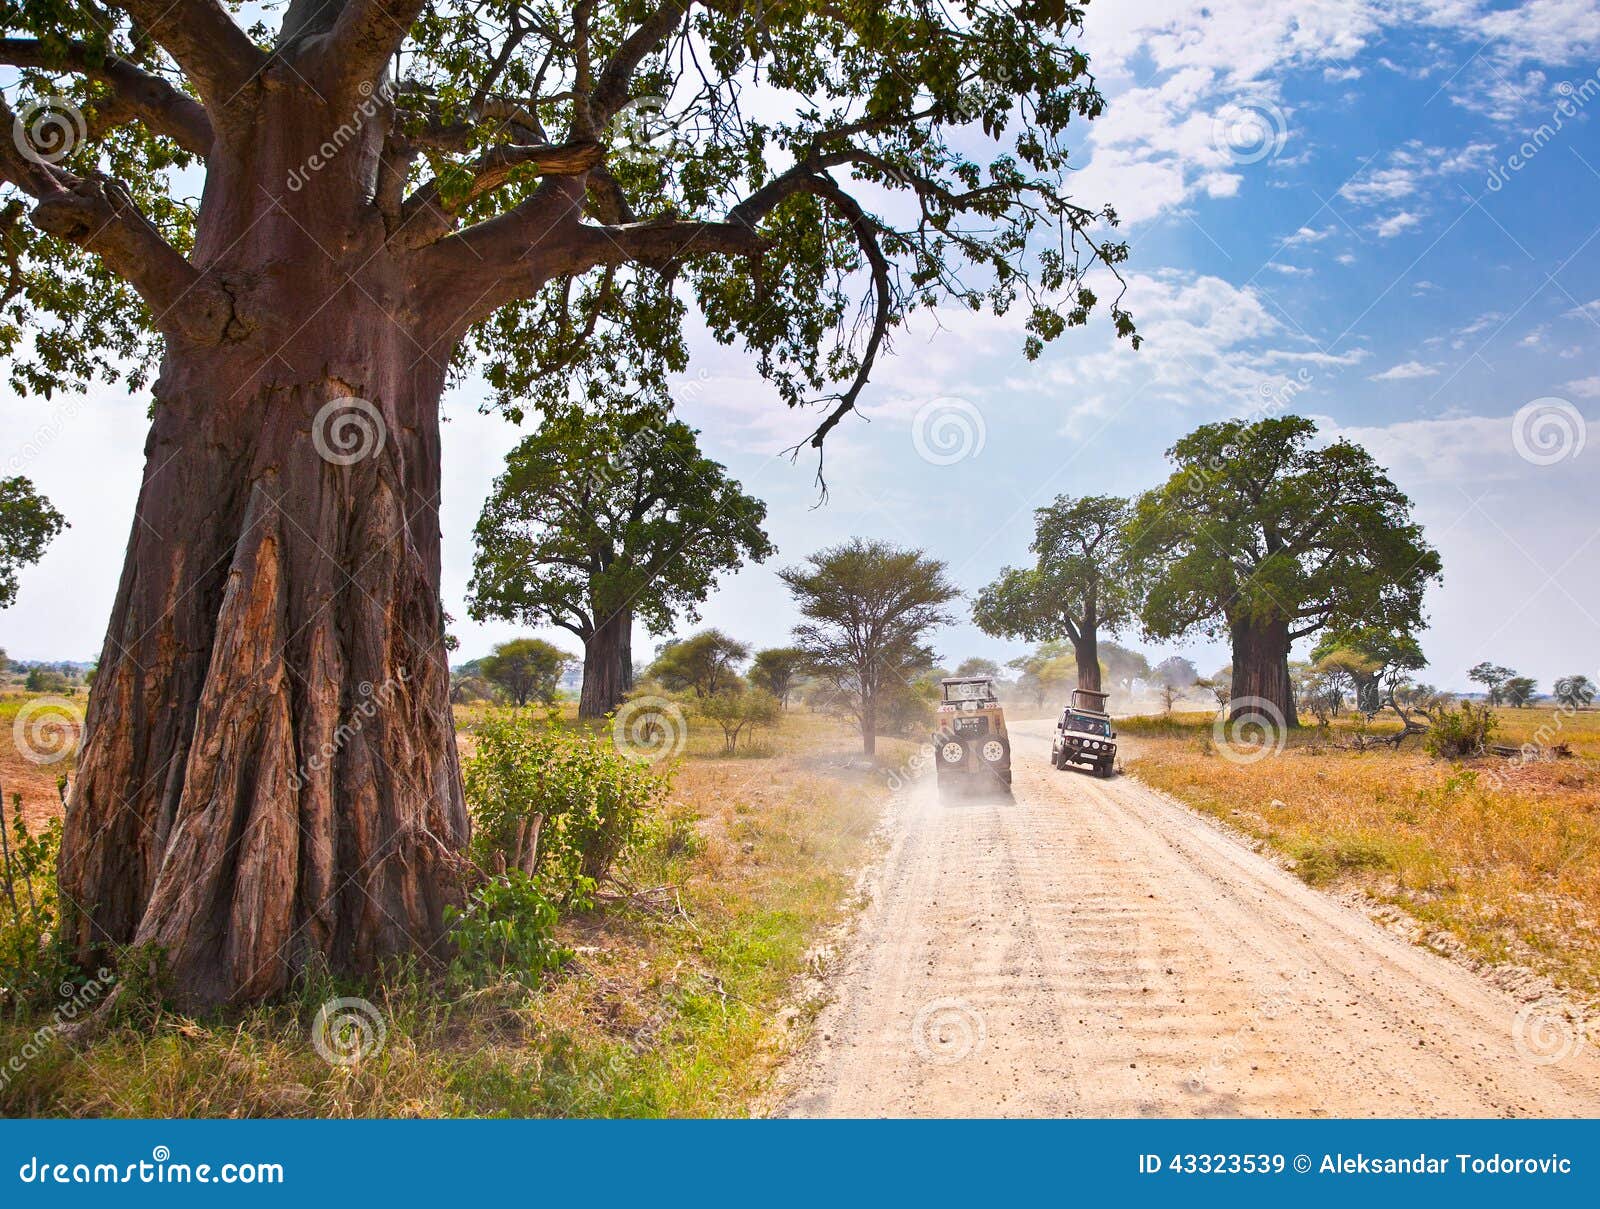 huge african trees and safari jeeps in tanzania.